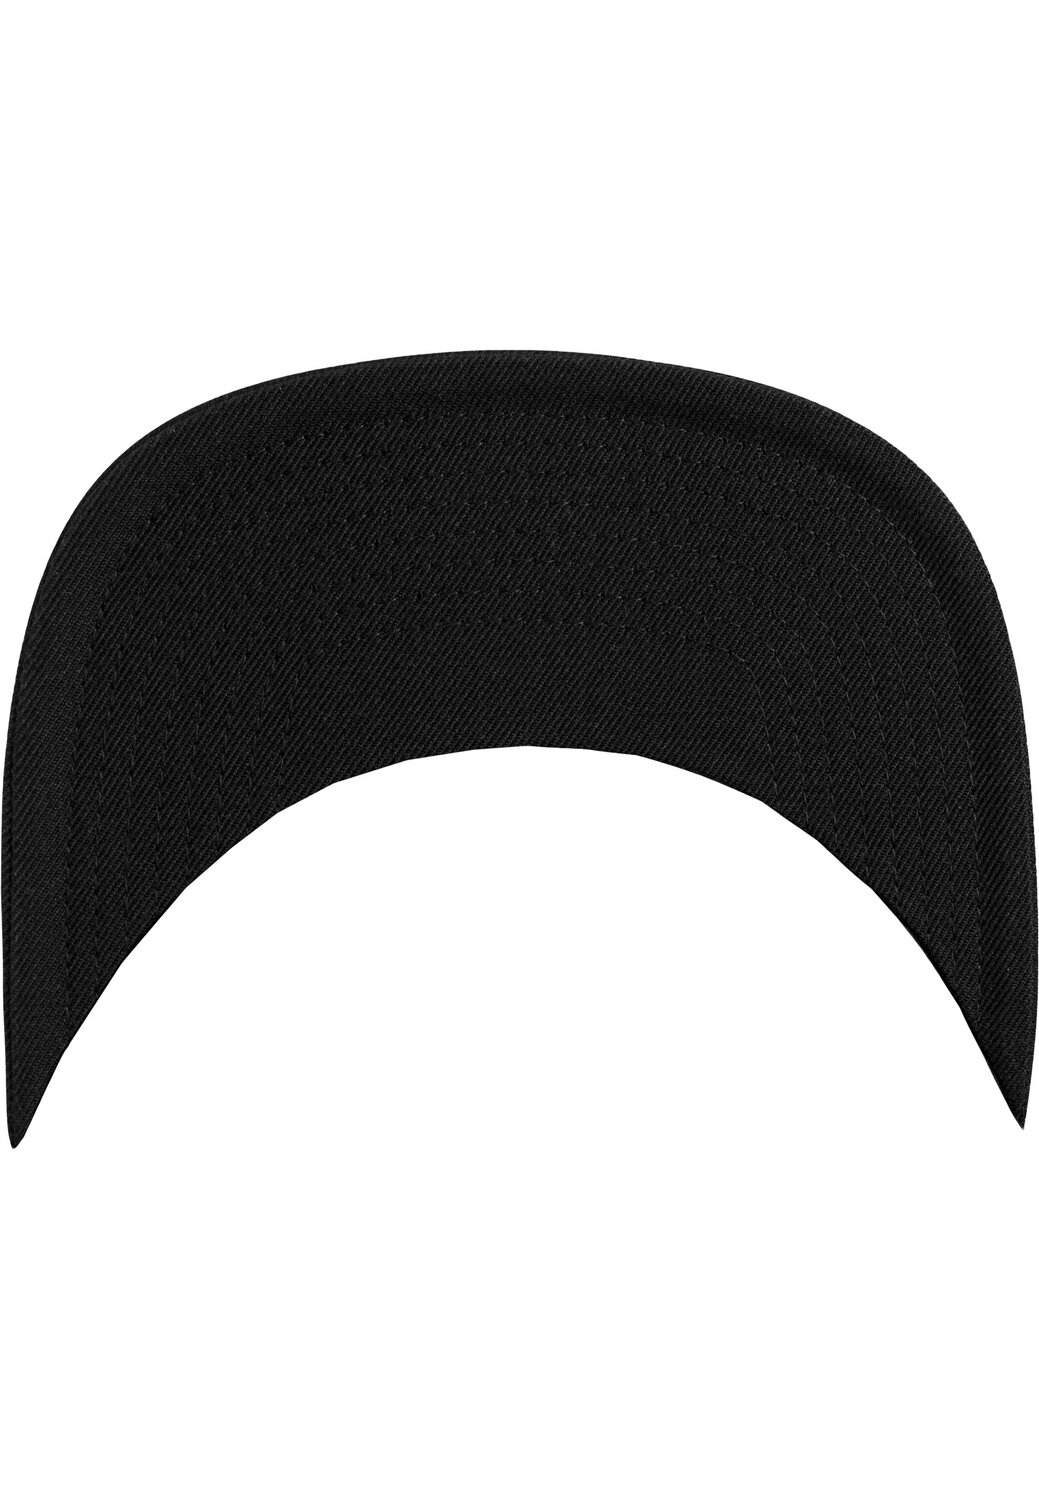 Snapback Cap Stripes Melange MAXISCOOT | Crown black/grey Flexfit